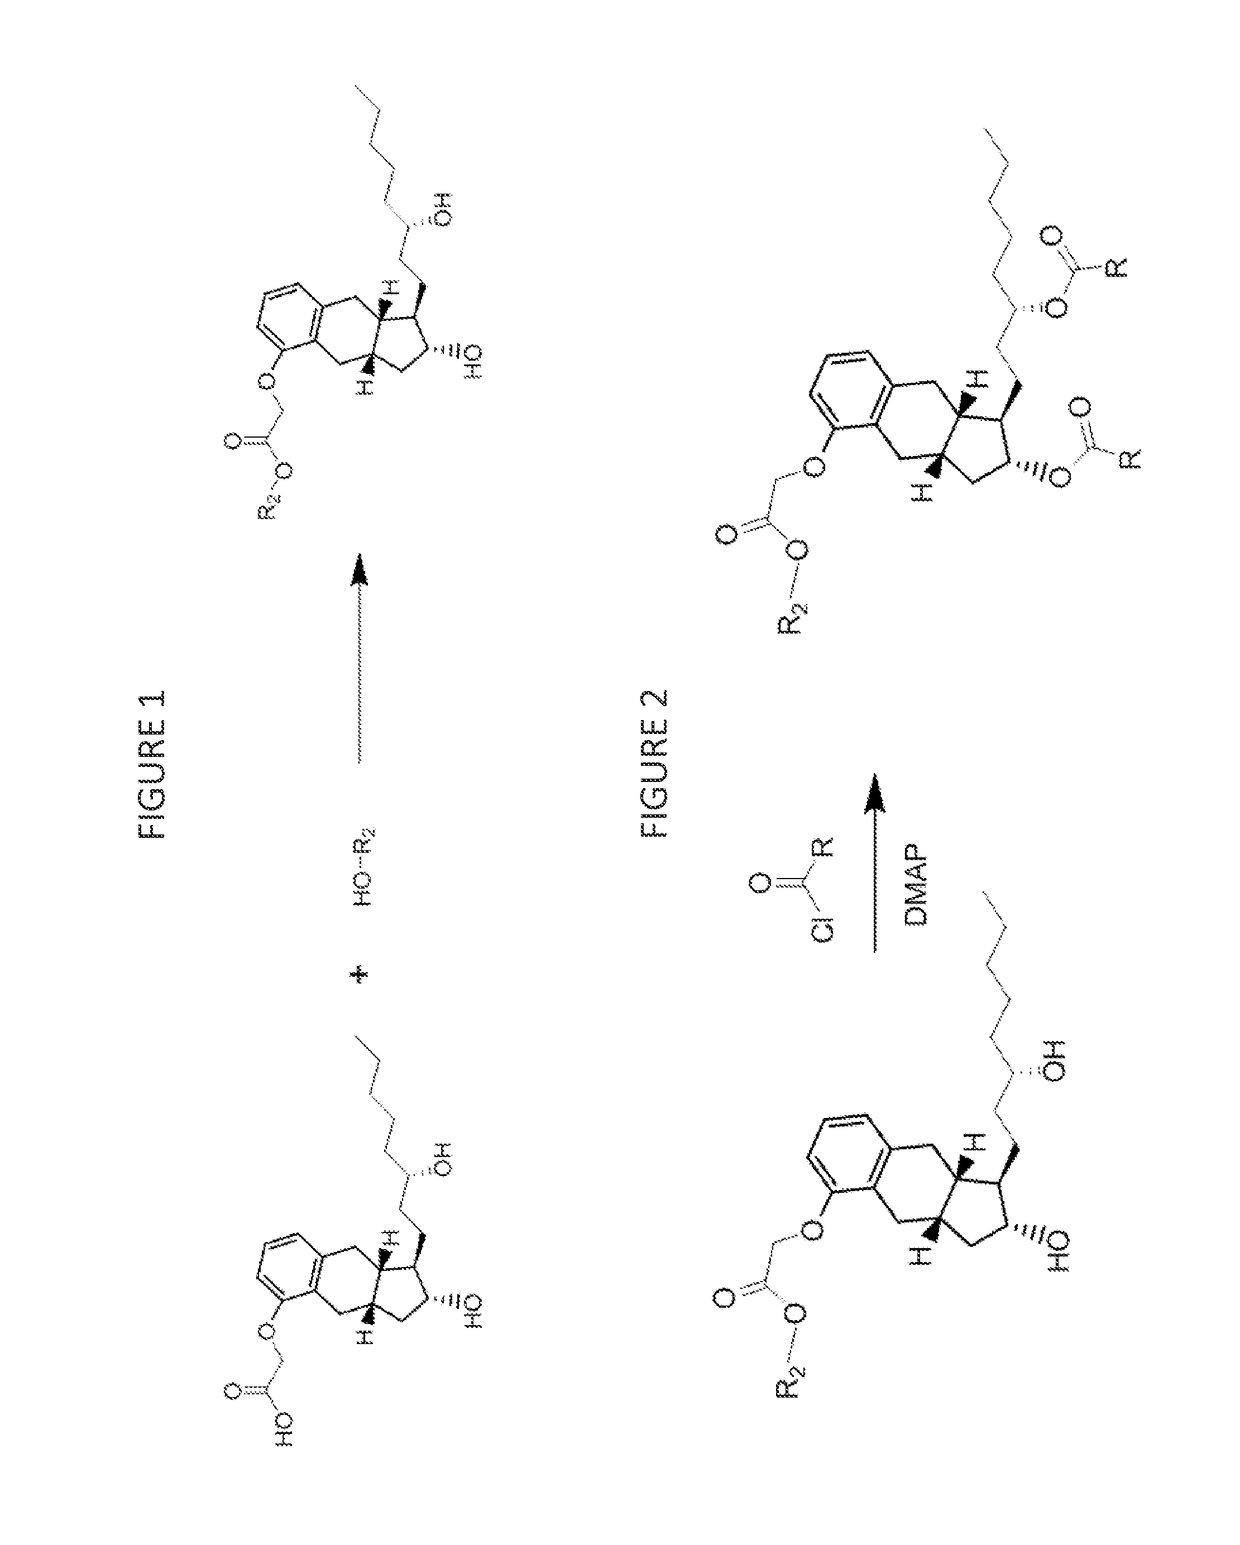 Methods of manufacturing treprostinil and treprostinil derivative prodrugs